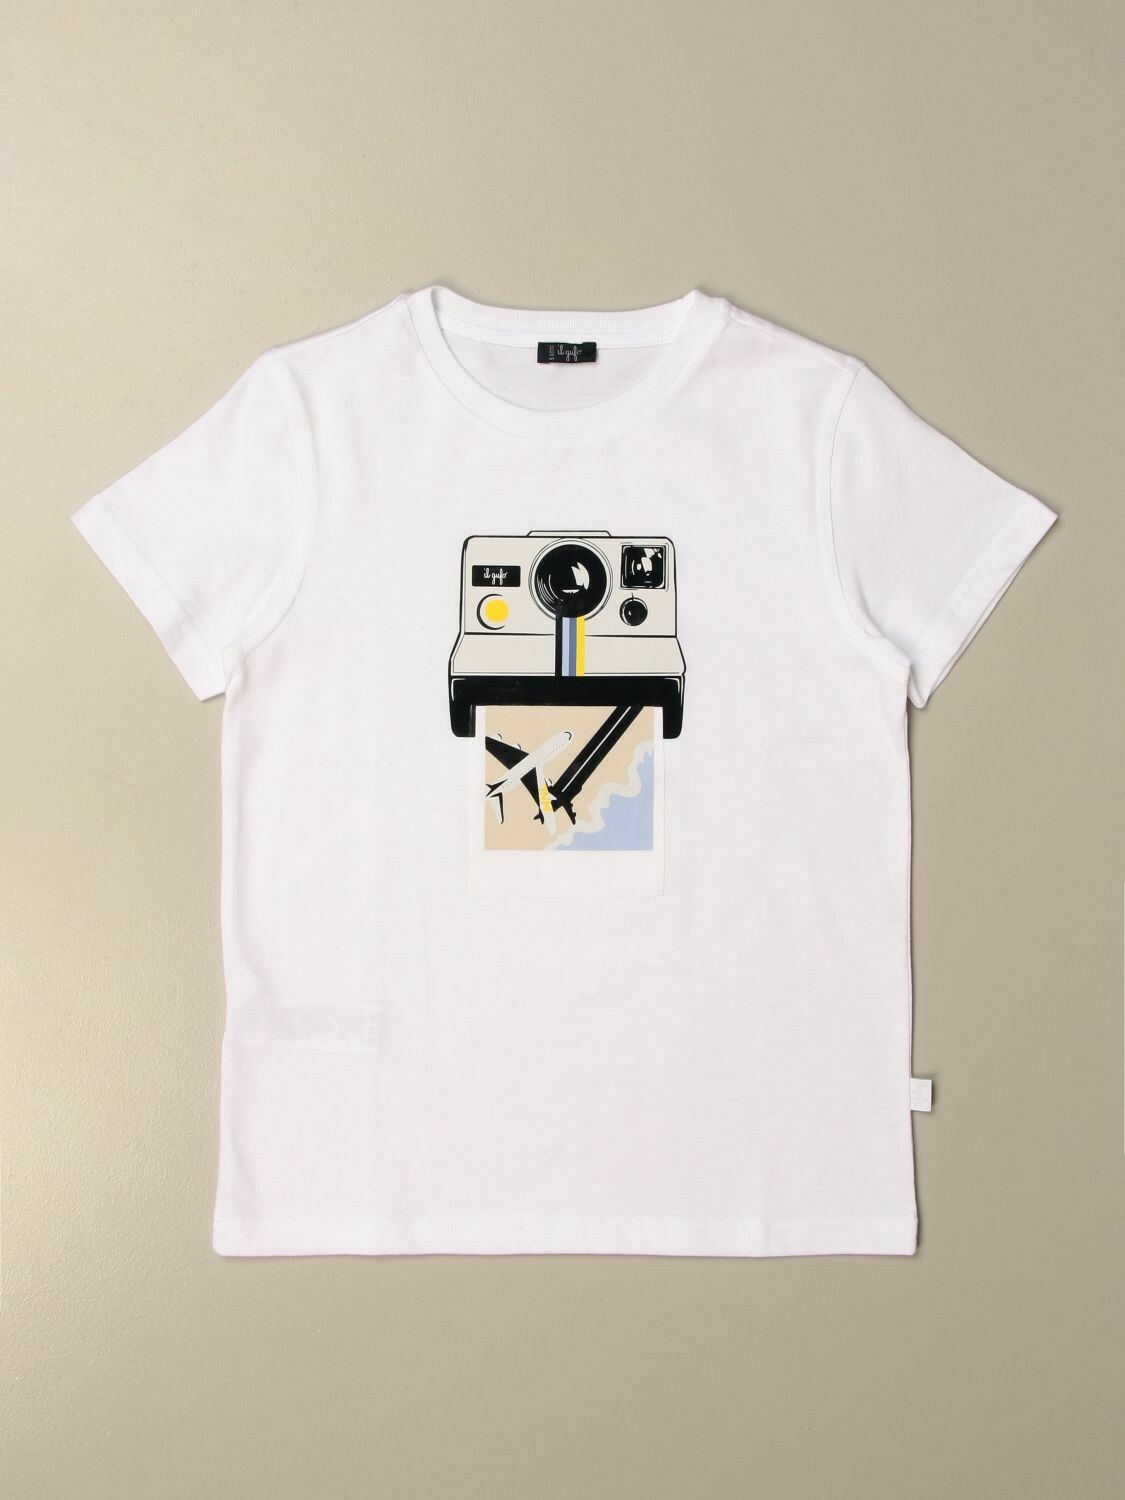 Il Gufo - T-shirt stampa macchina fotografica, Size: 4 anni